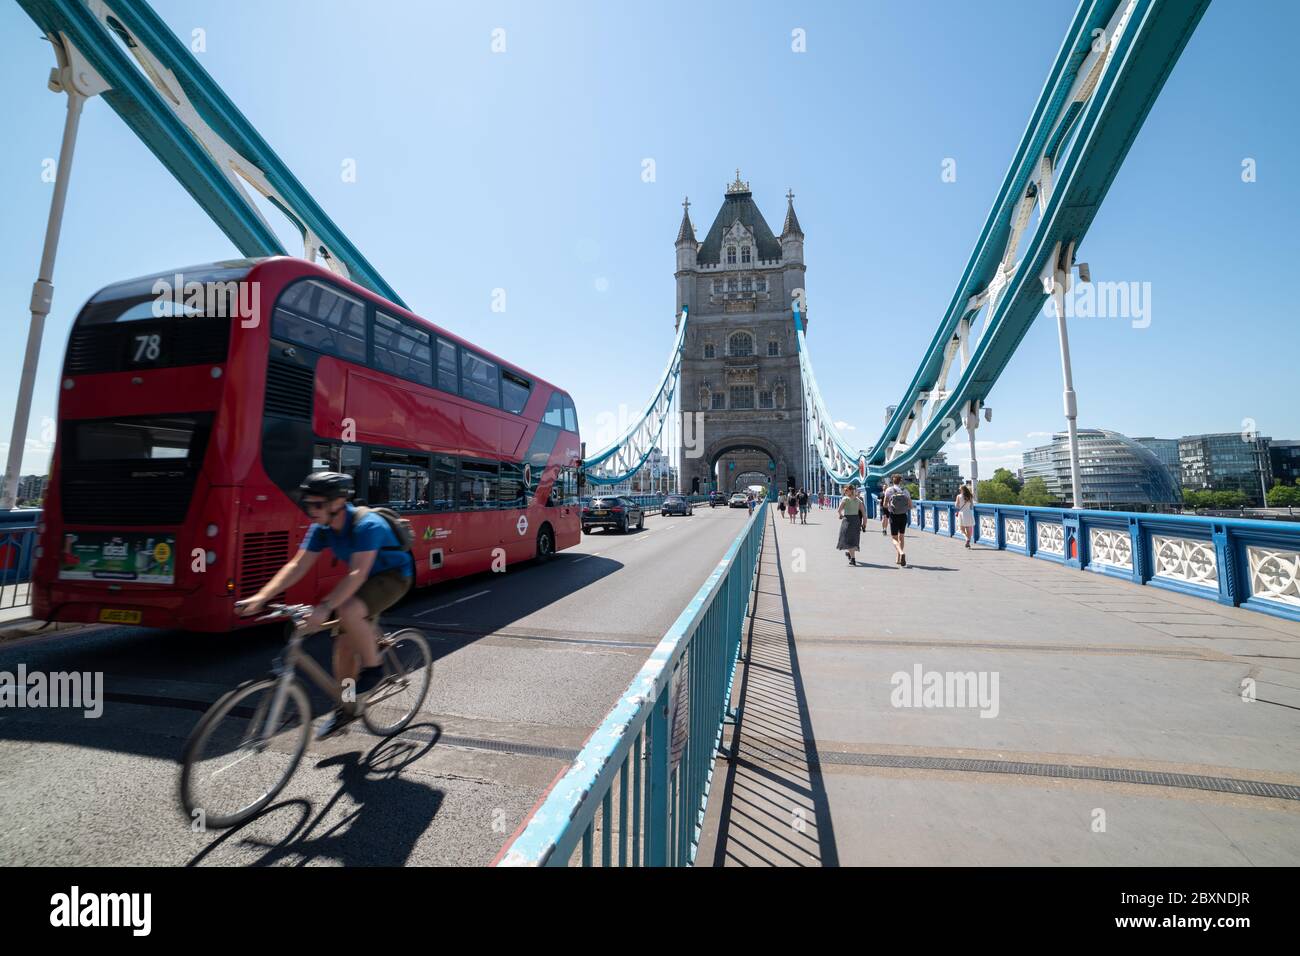 People and traffic on Tower Bridge Road, Tower Bridge,London, UK. Stock Photo